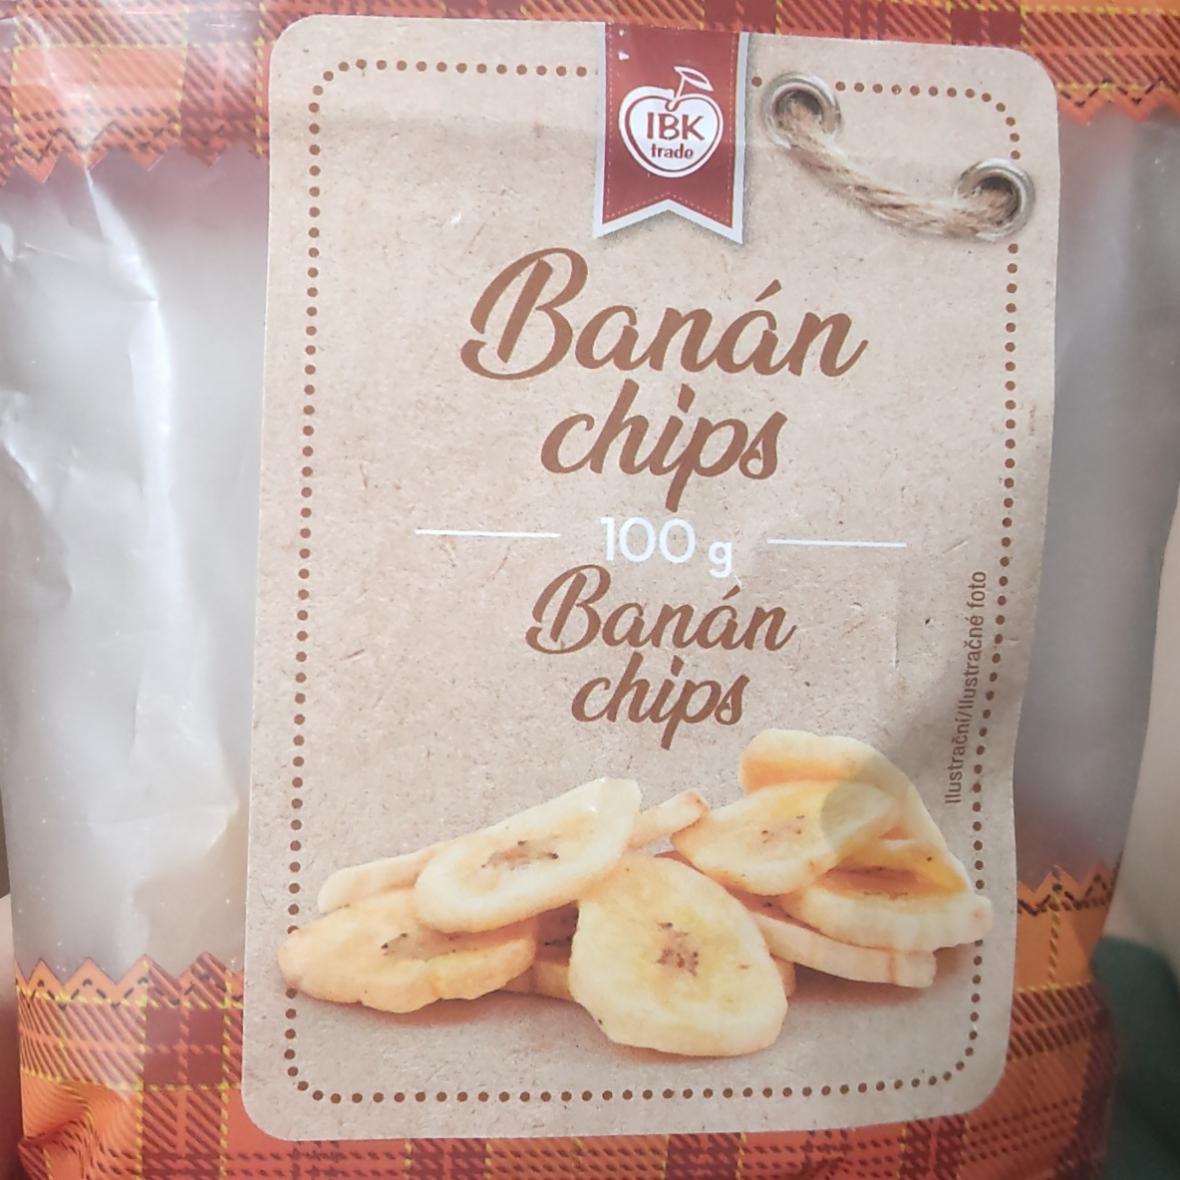 Фото - Чипси бананові Banan Chips IBK Trade